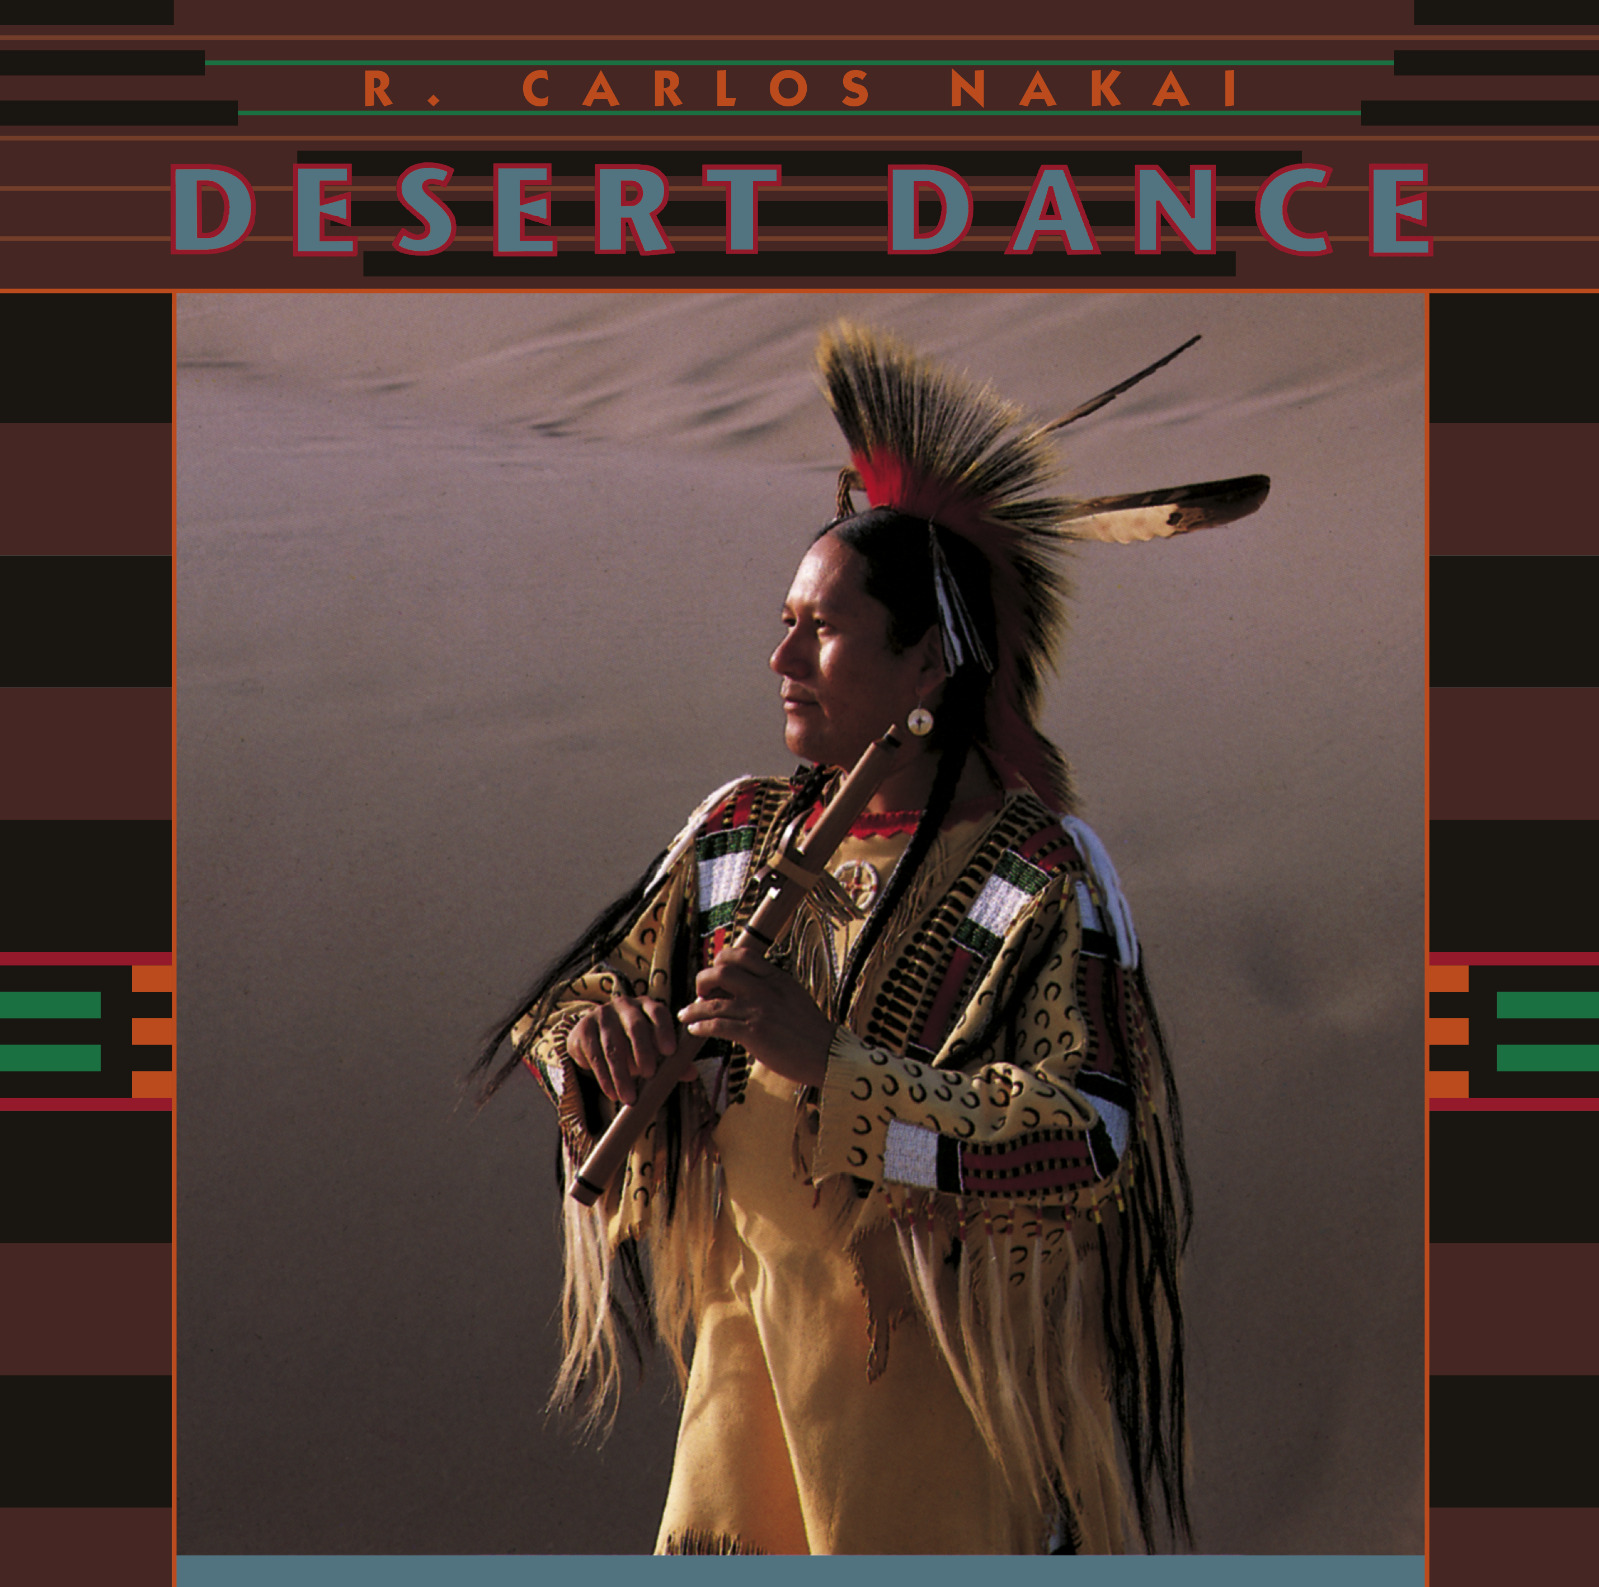 DESERT DANCE – R. CARLOS NAKAI